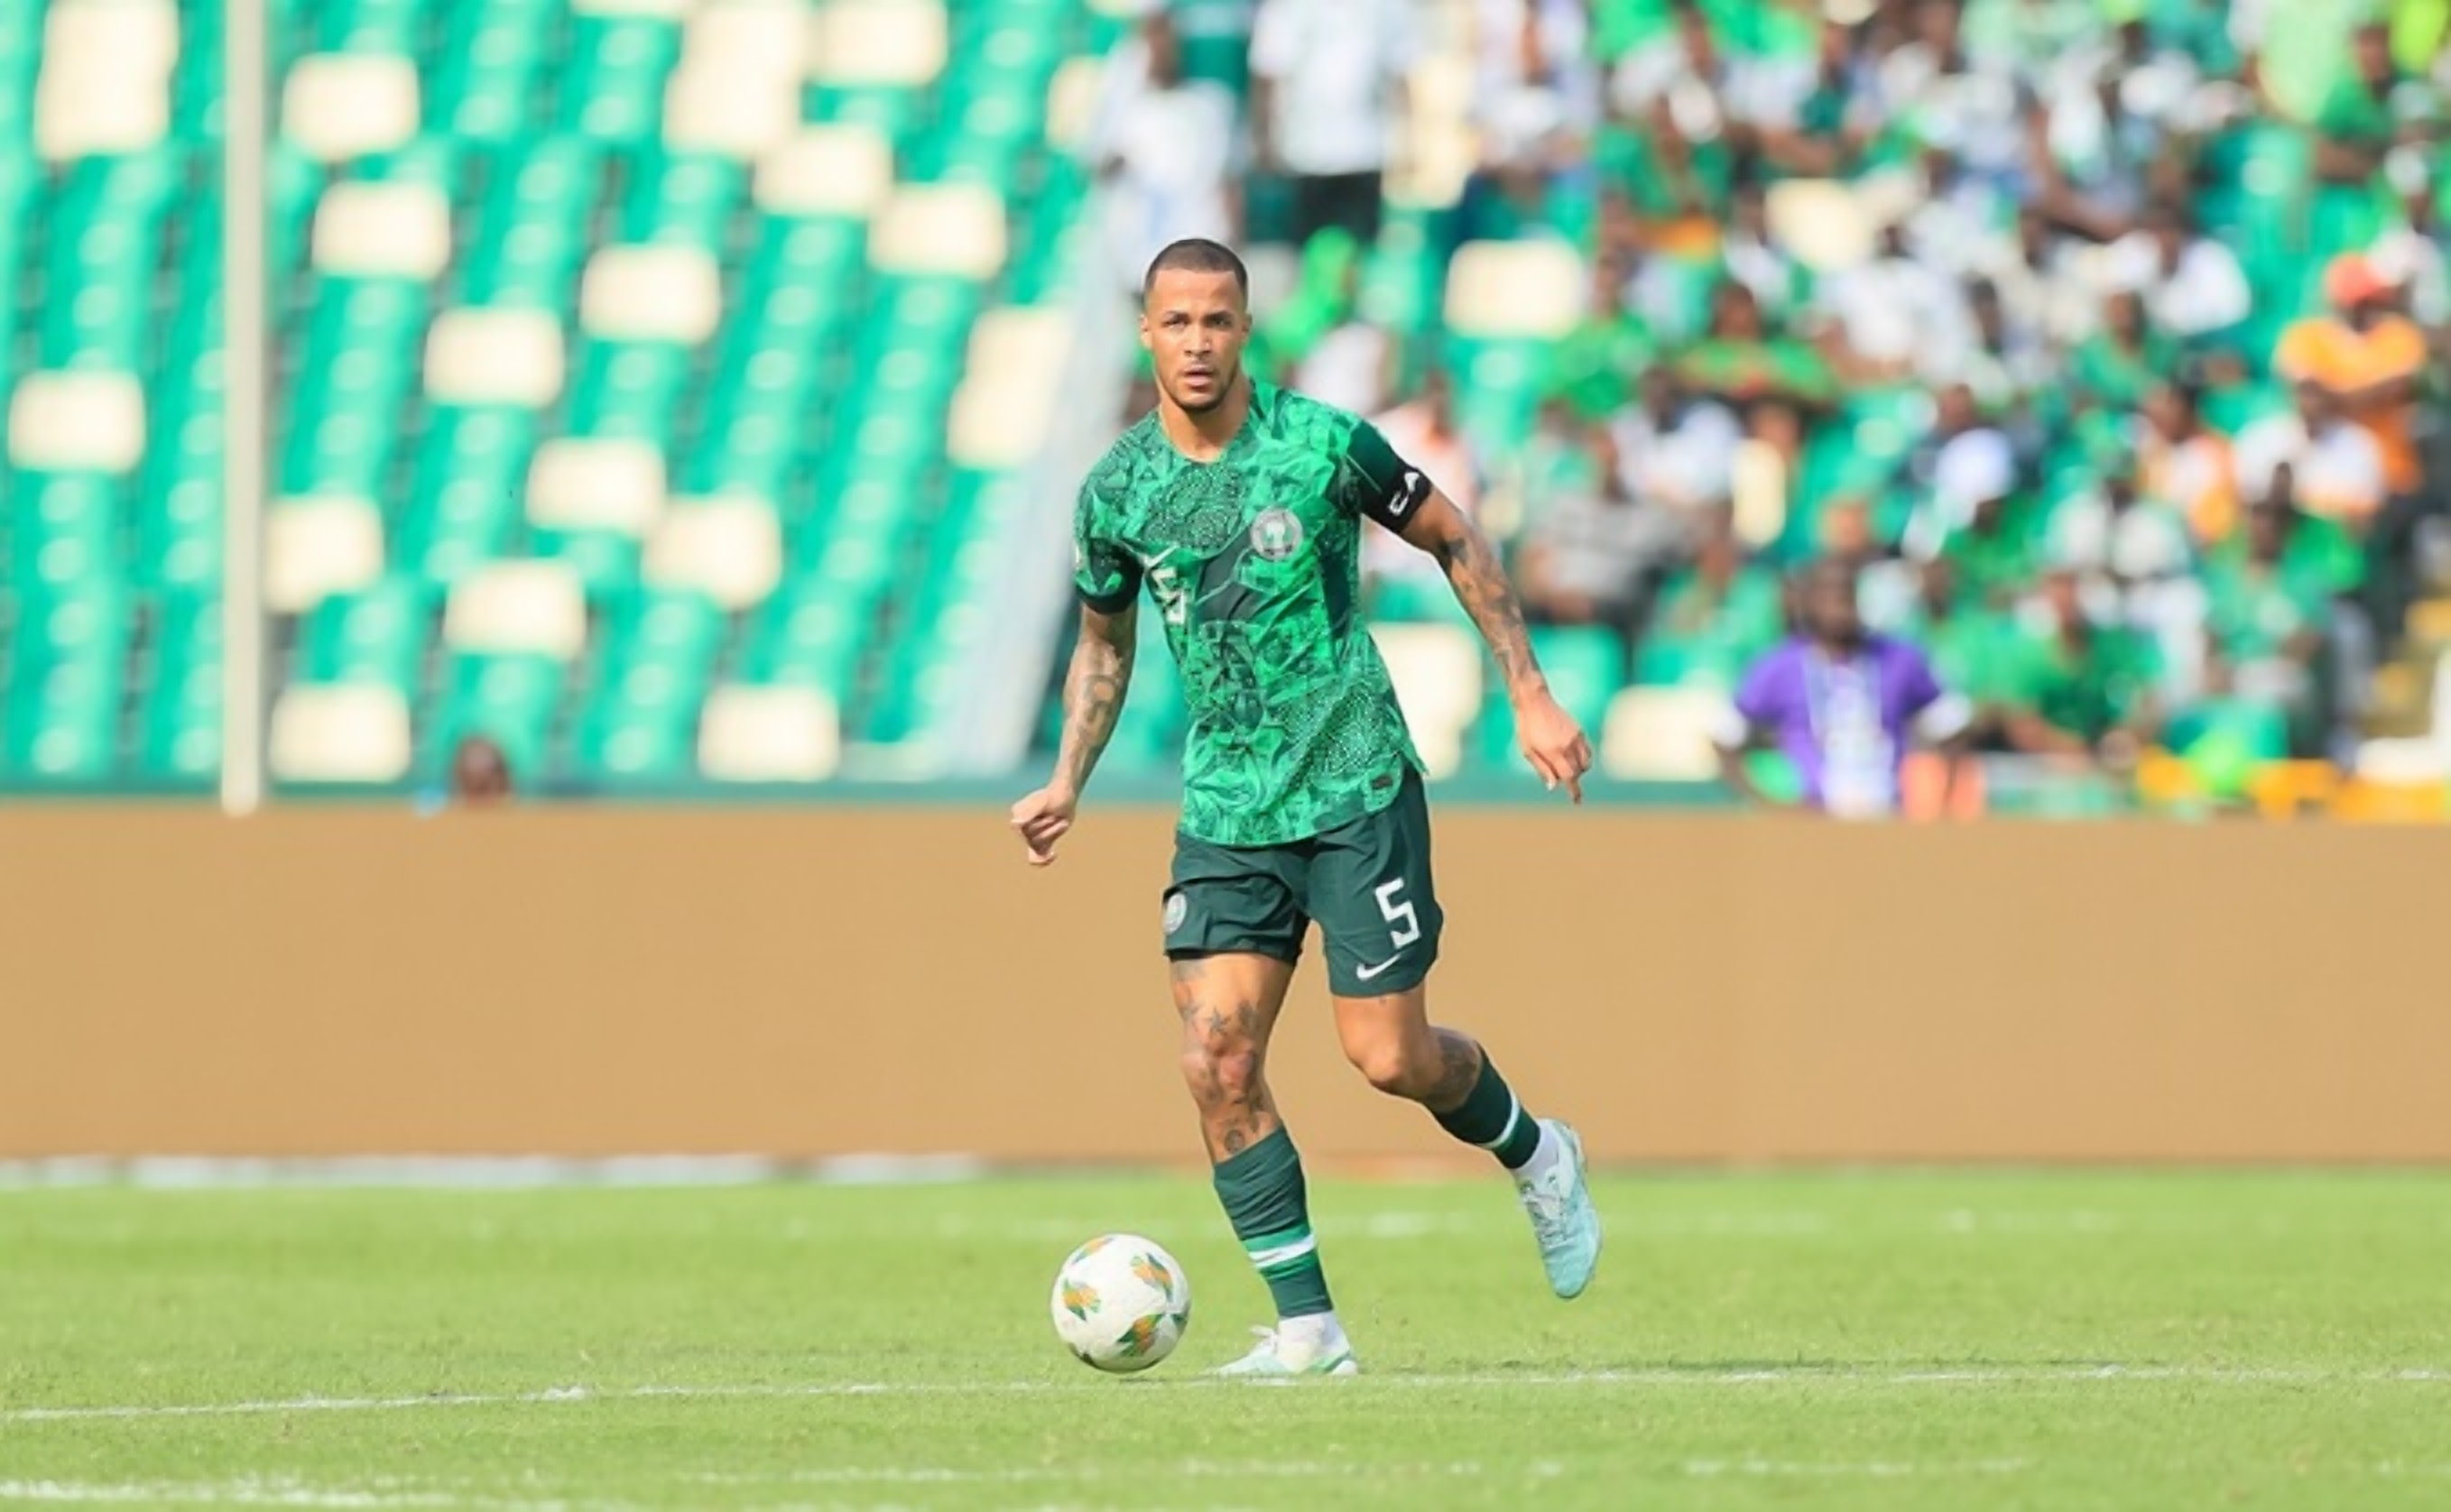 KnowESG_Nigeria's Captain Unveils Greenest Football Boots